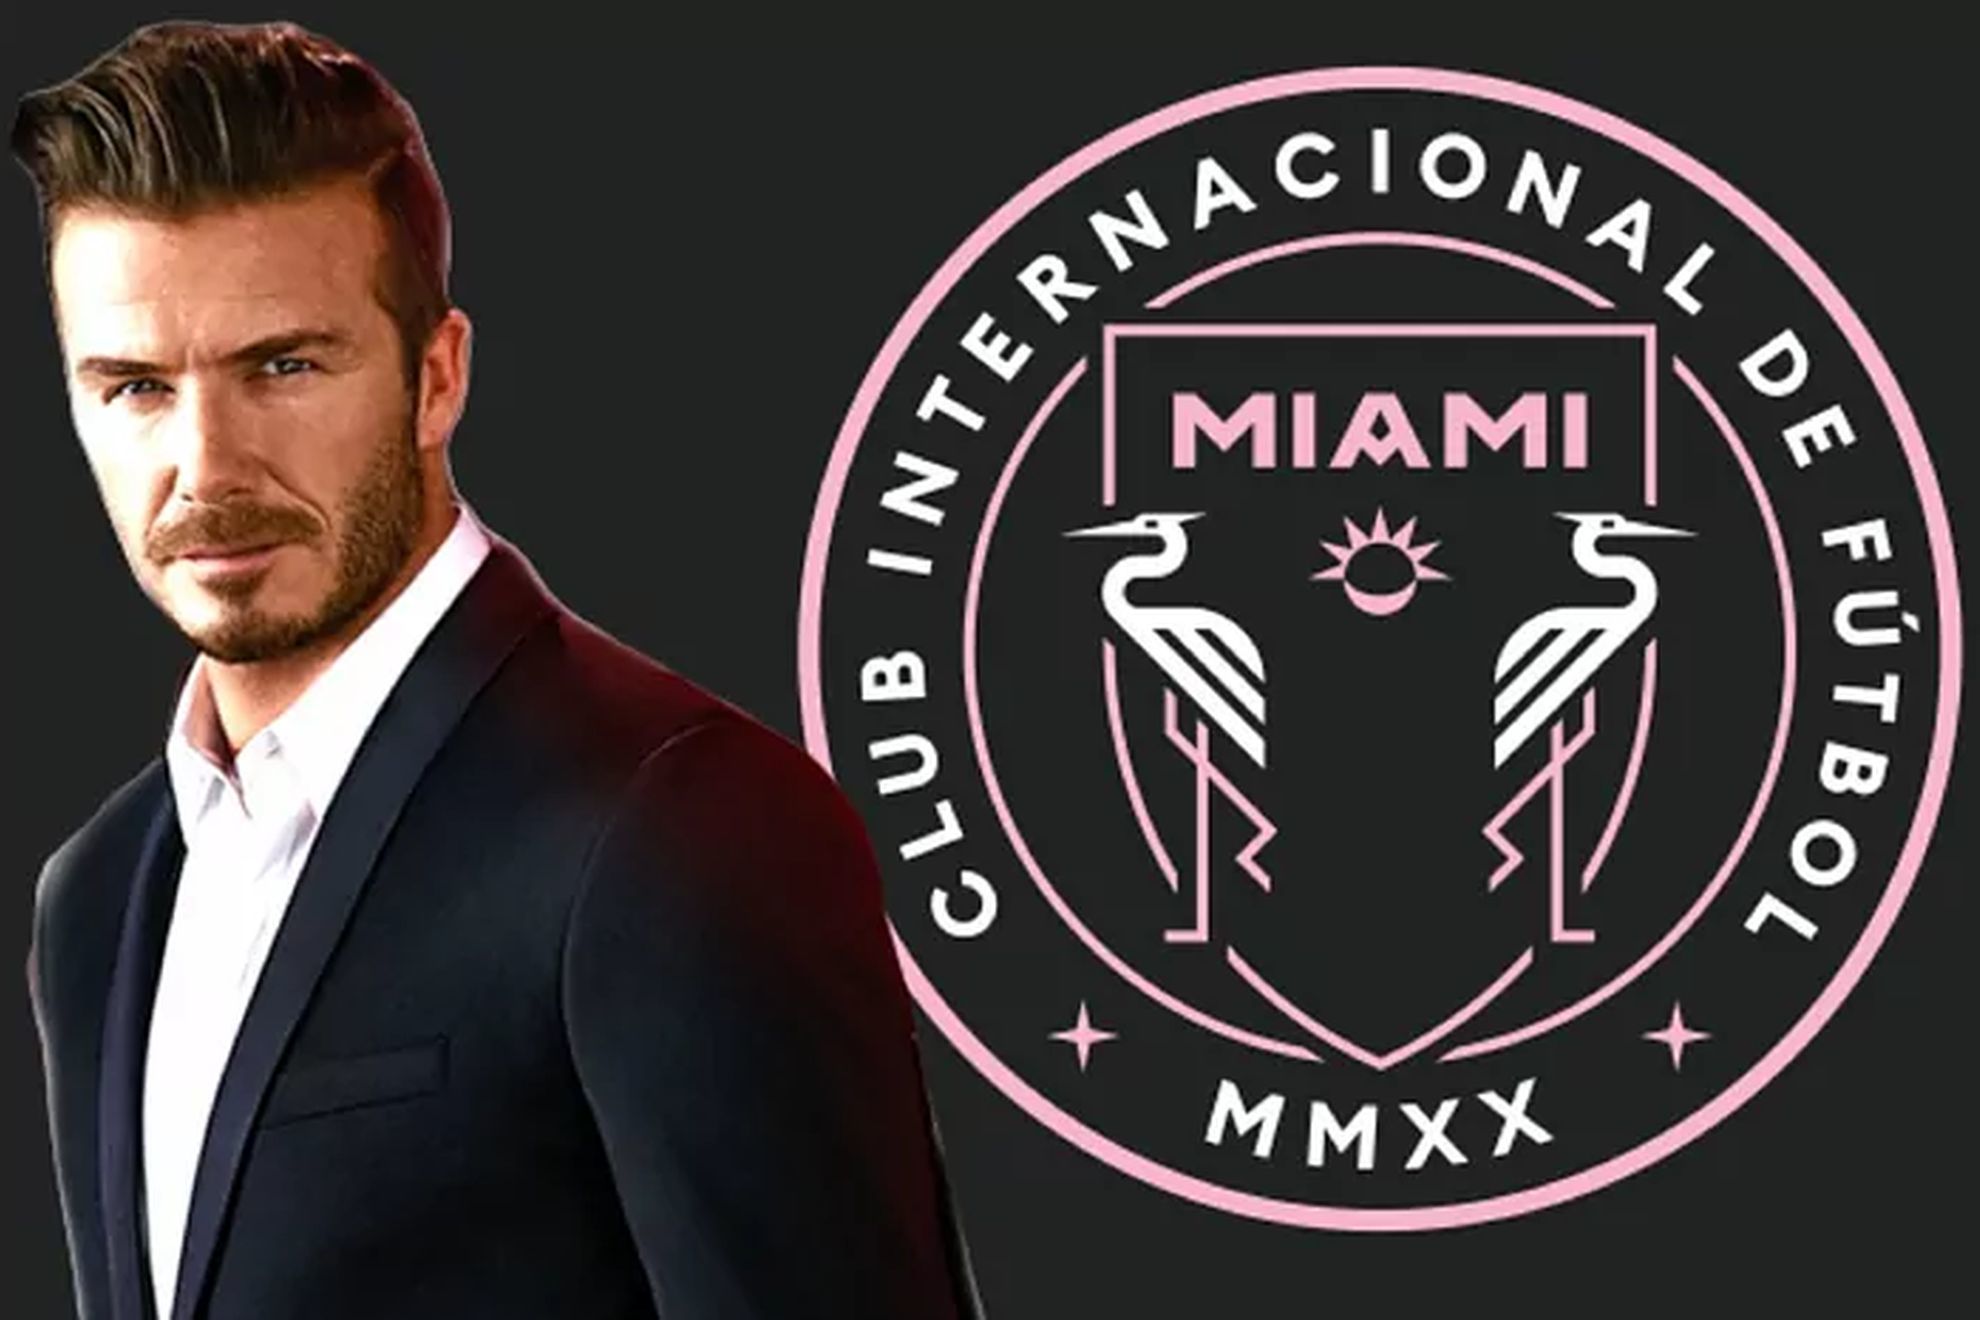 David Beckham and the Inter Miami badge